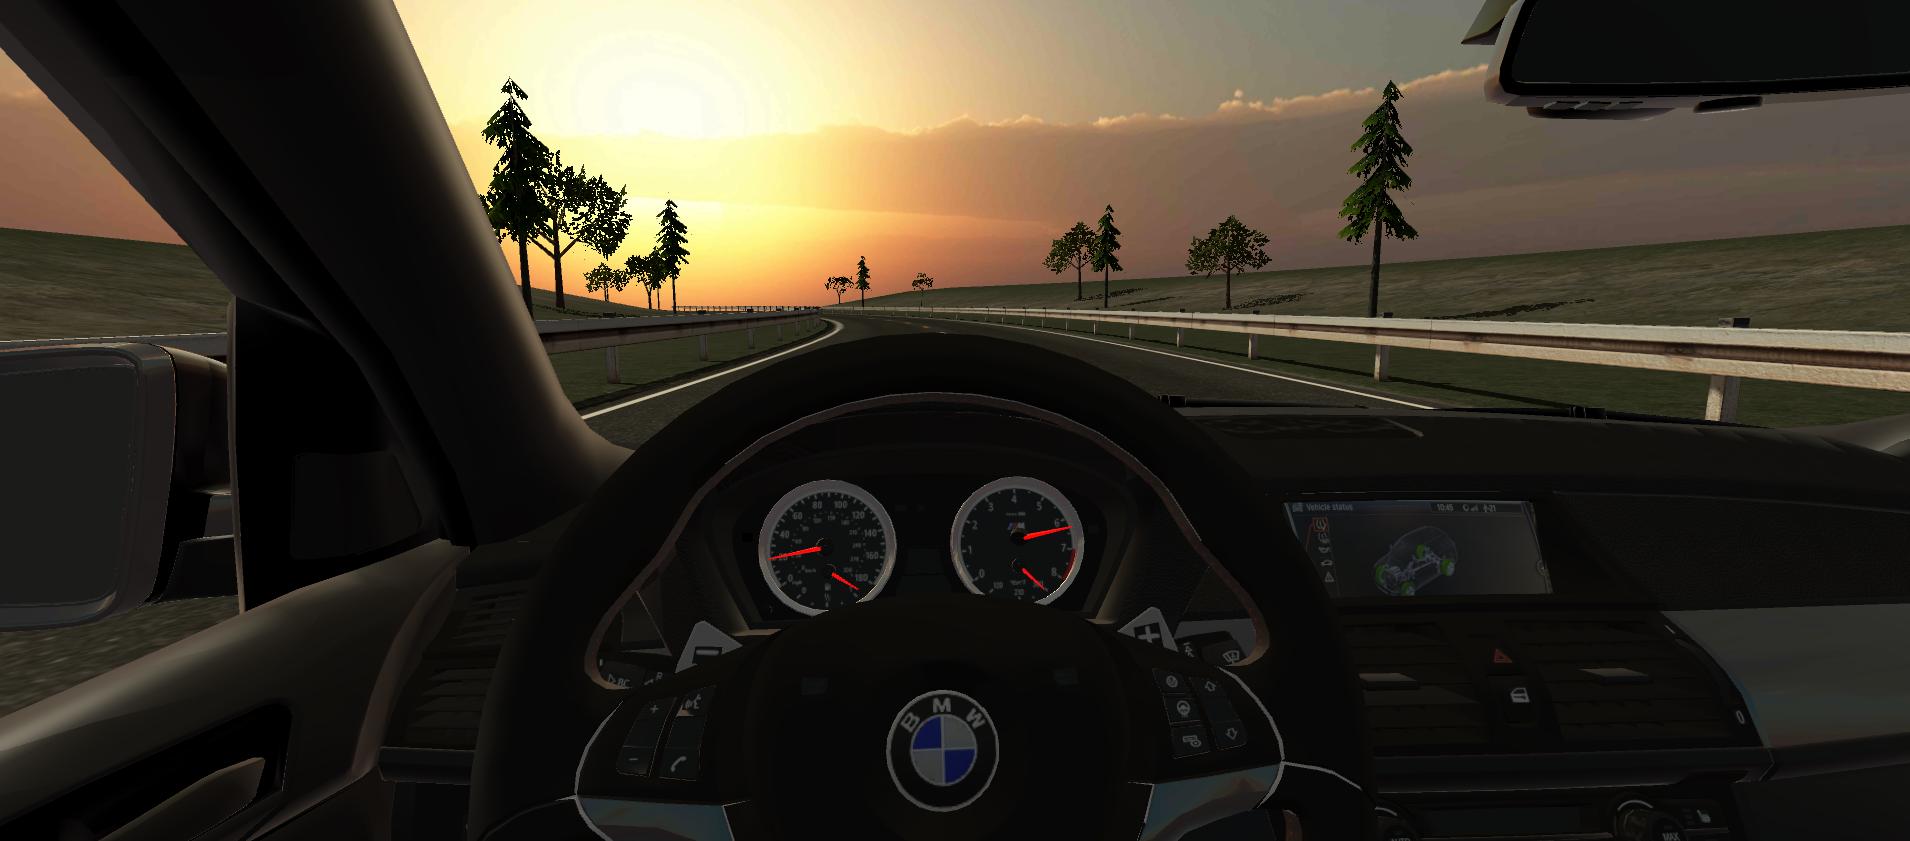 Drive Simulator. BMW m5 Driving Simulator - Android. Есть ли жена в игре Driver Simulator.